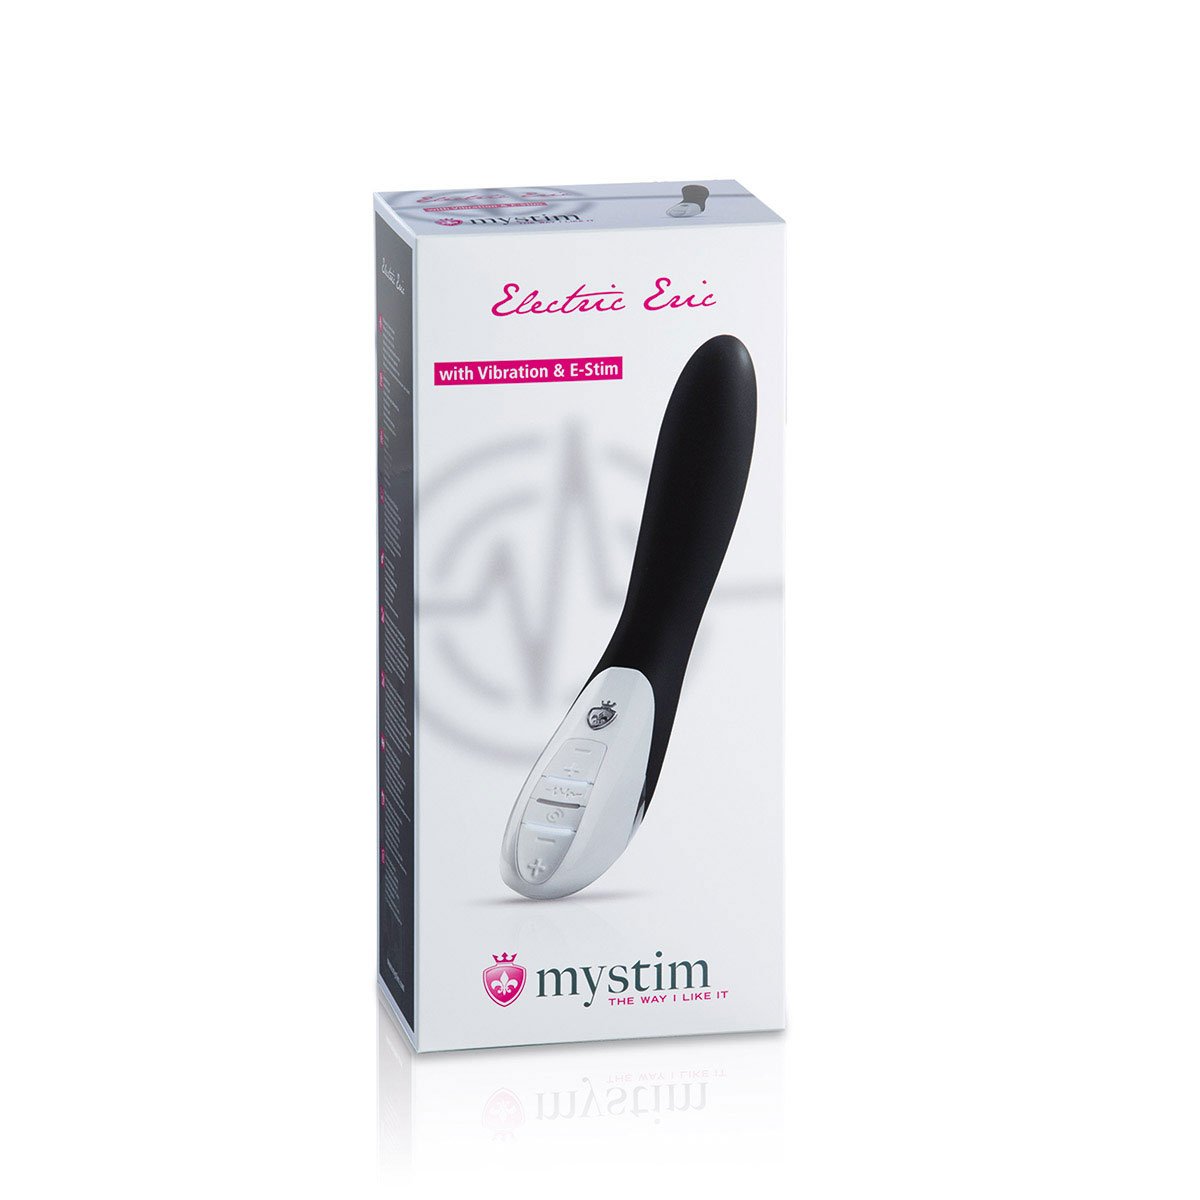 Mystim Electric Eric E-Stim Vibrator - Buy At Luxury Toy X - Free 3-Day Shipping